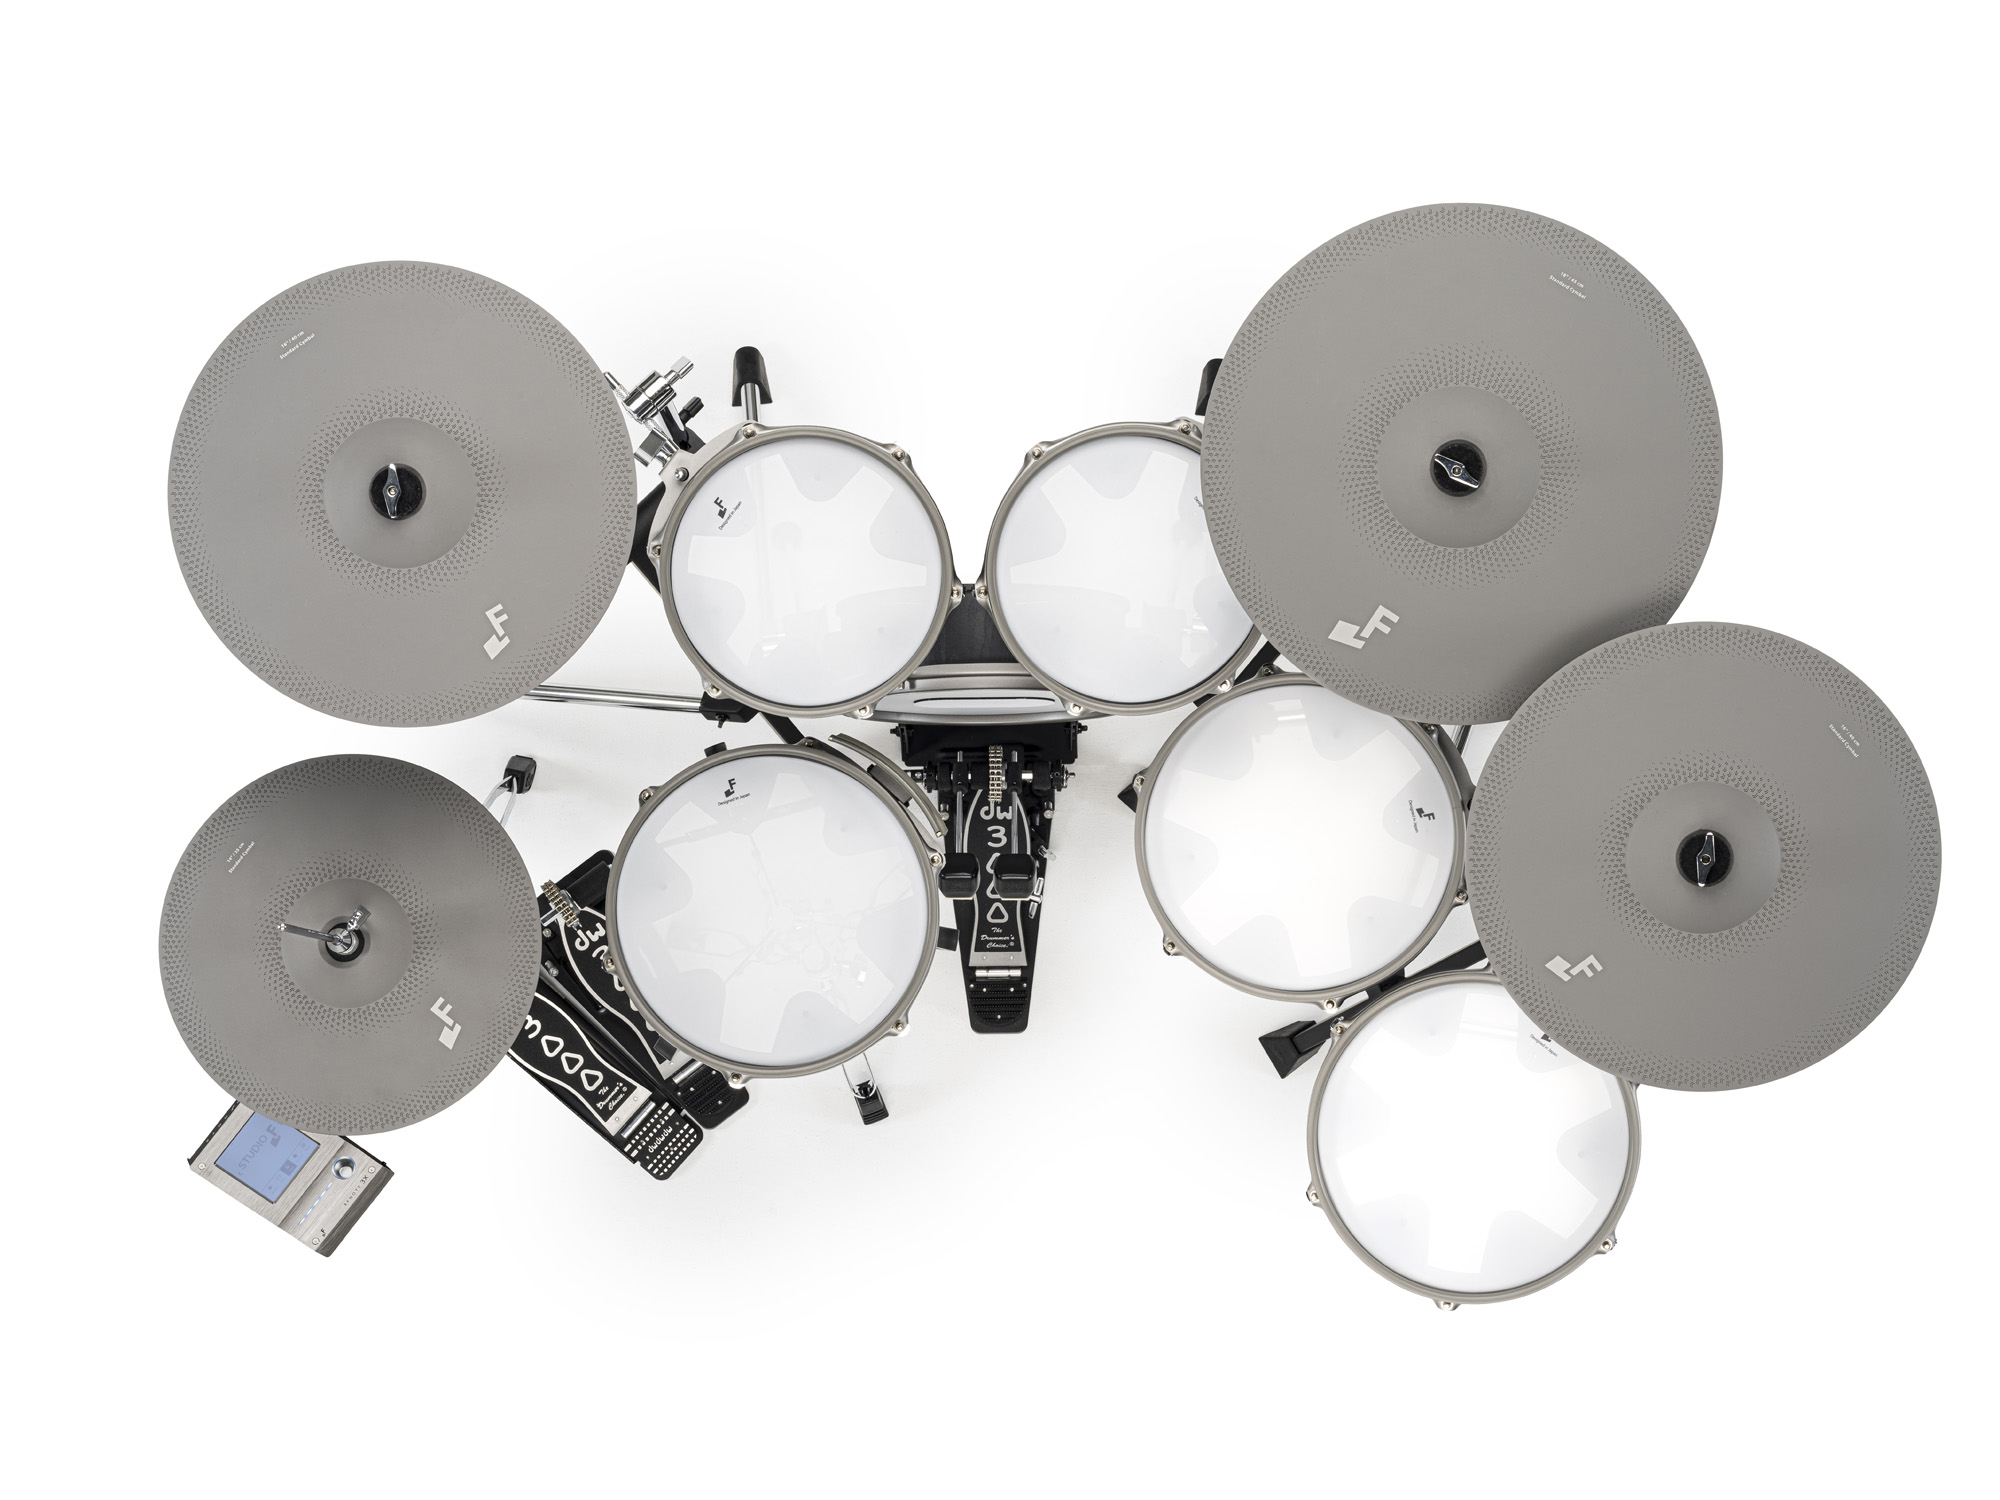 Efnote Efd3x Drum Kit - Komplett E-Drum Set - Variation 4